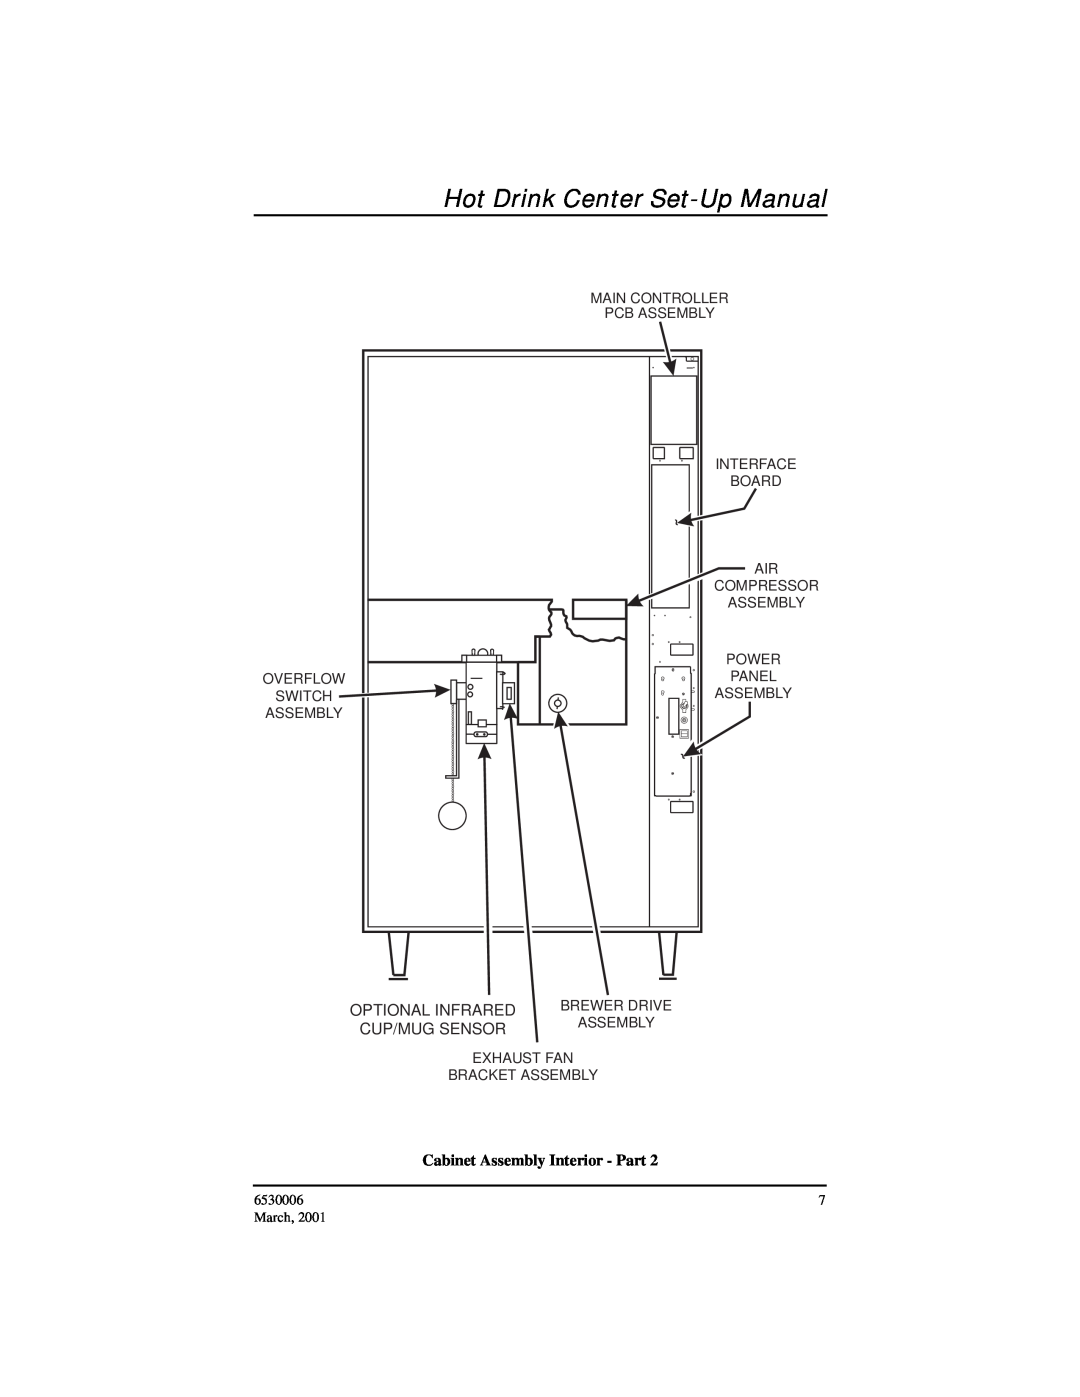 Crane Merchandising Systems 6530006 Hot Drink Center Set-Up Manual, Optional Infrared, Cup/Mug Sensor, Interface, Board 